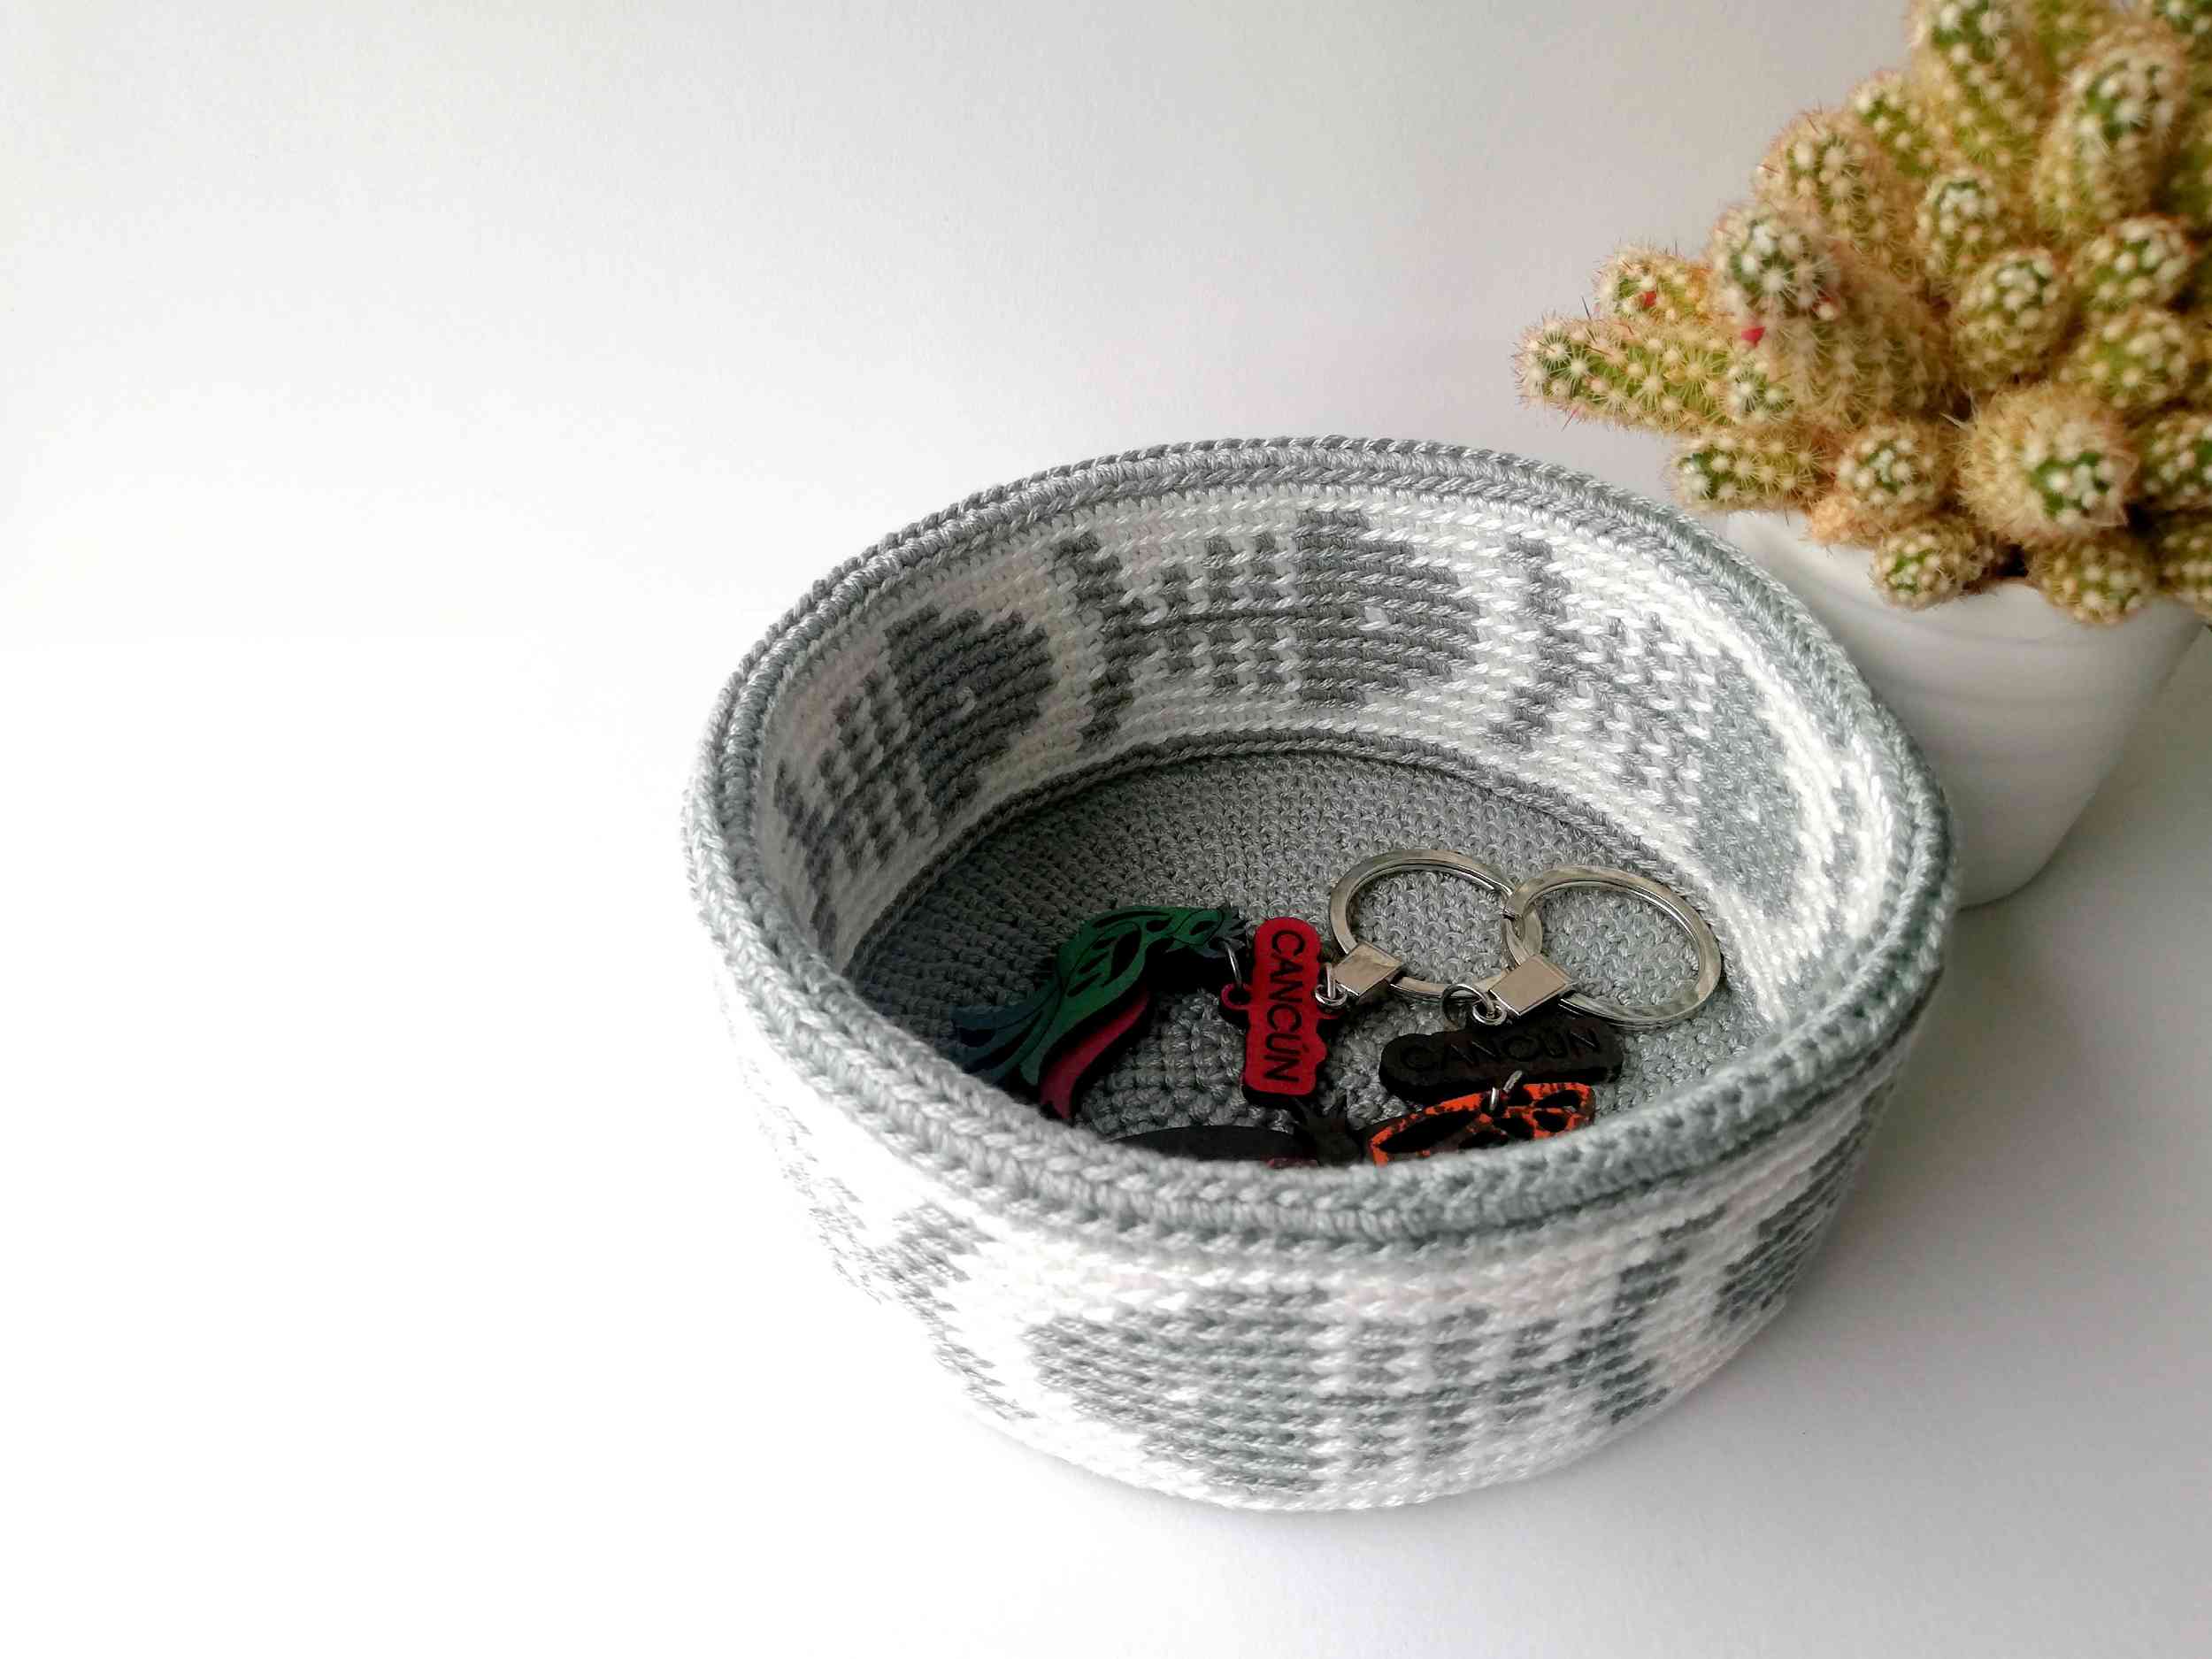 Tapestry crochet basket with fish bones